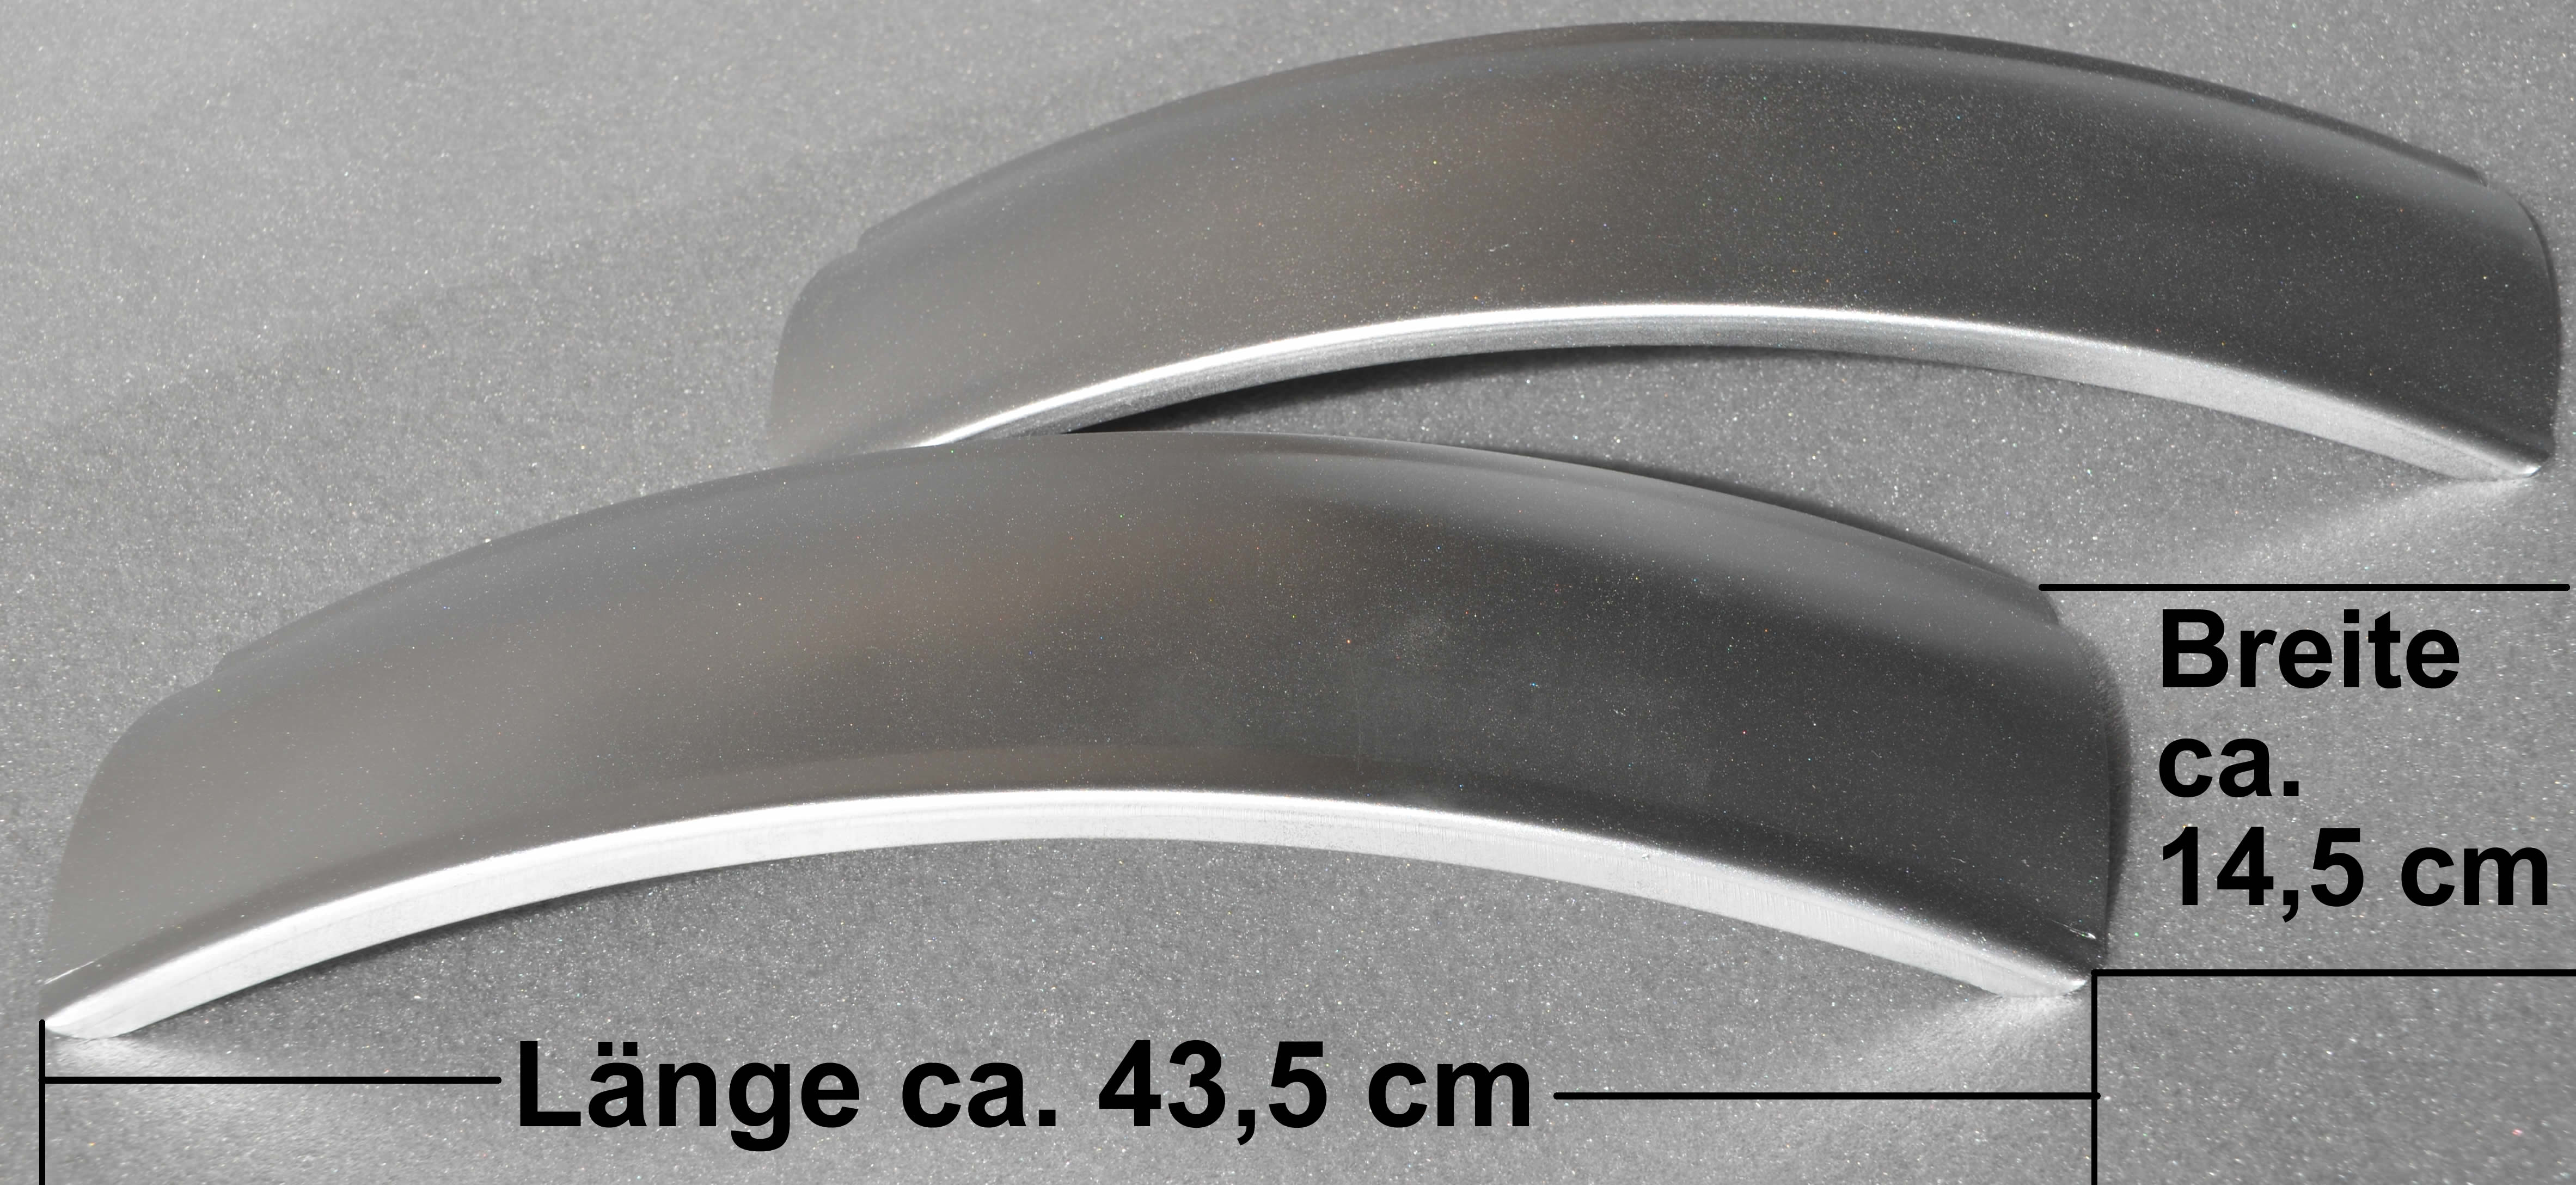 Oldtimer Jehle - Kotflügel für 16 Zoll Reifen Breite ca 14,5 cm Länge ca  43,5 cm